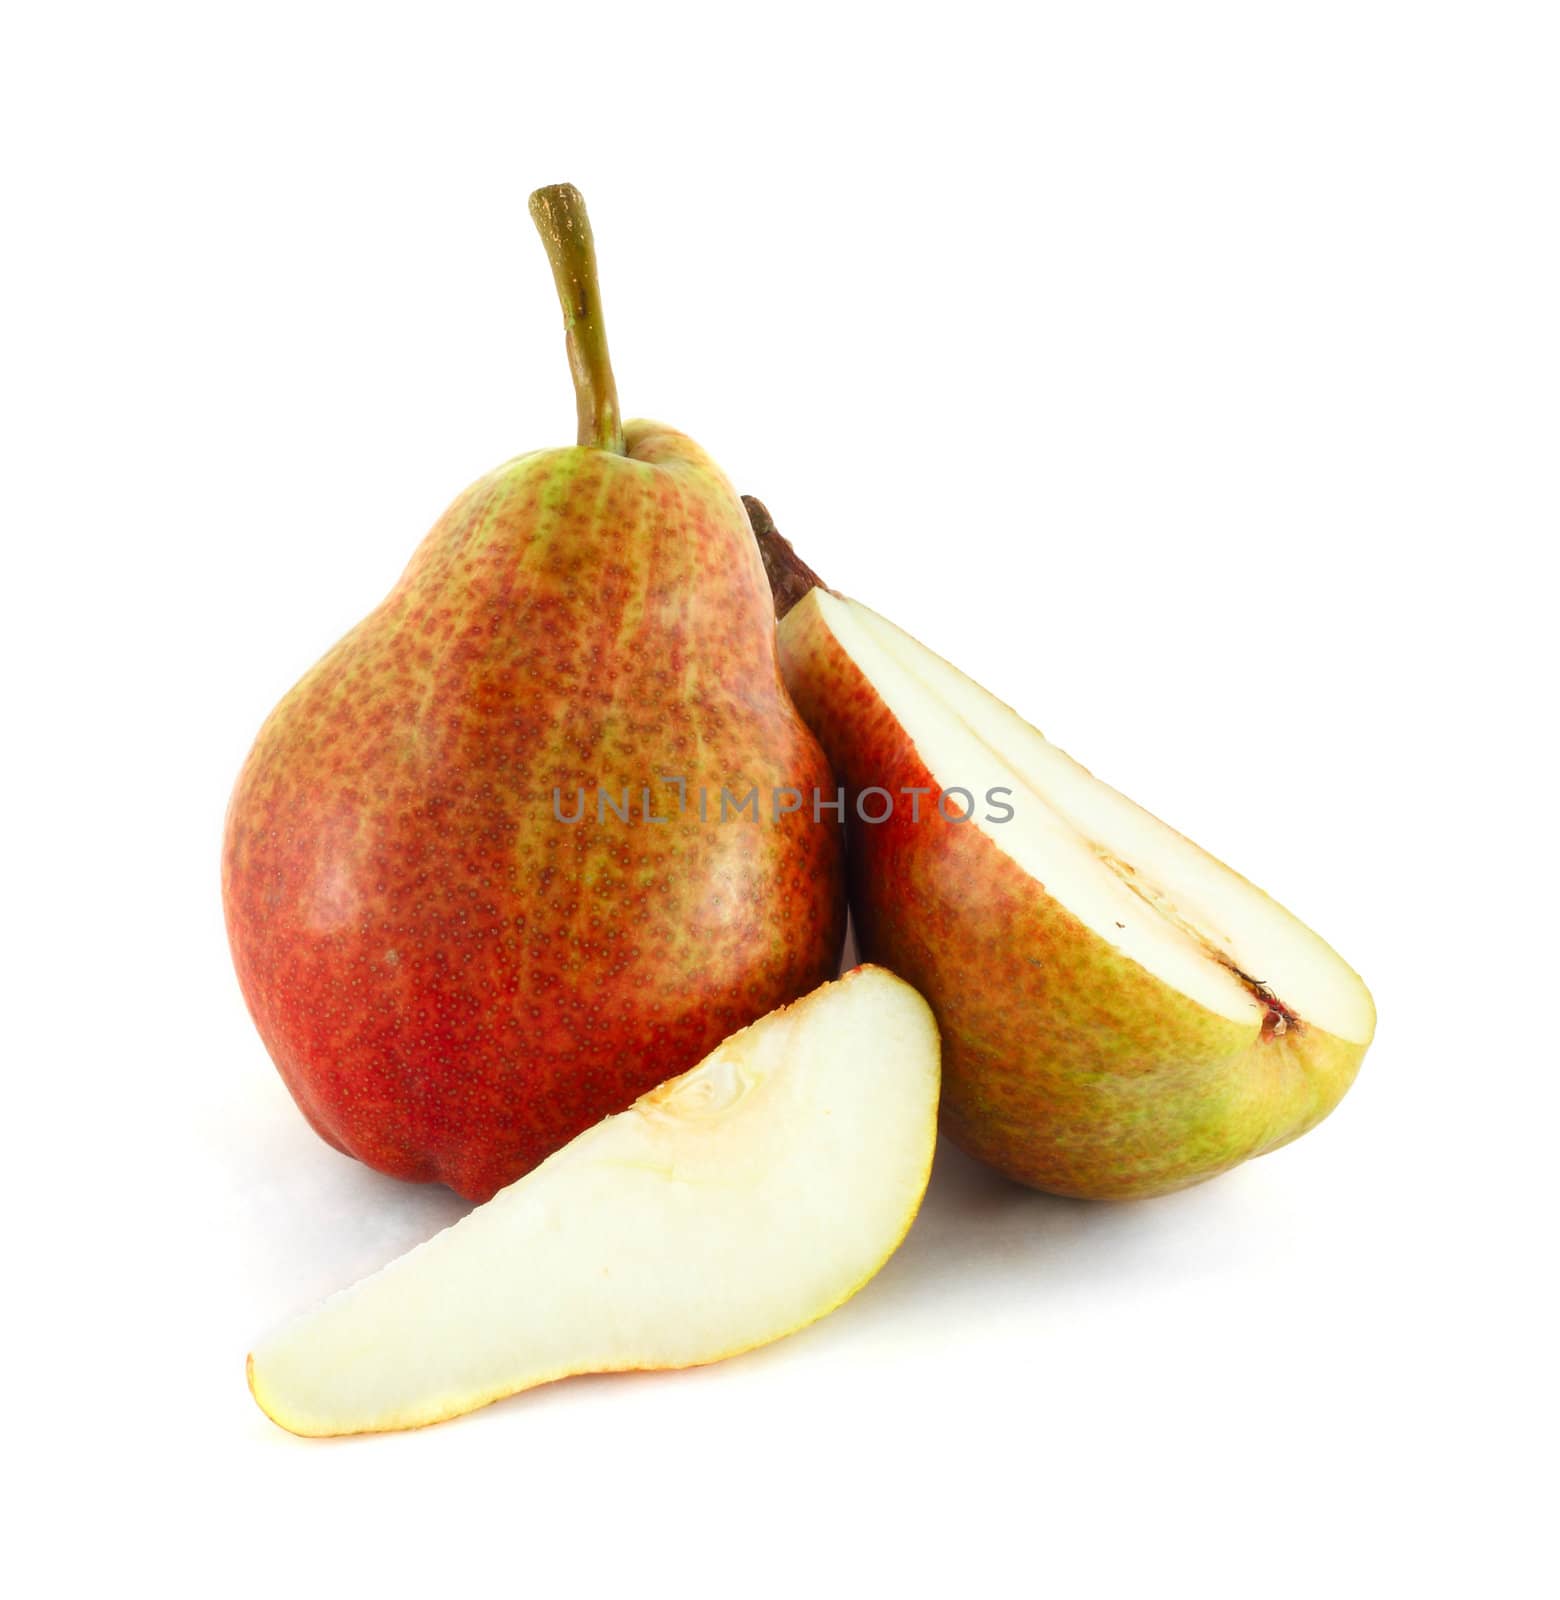 Cutted pears by destillat